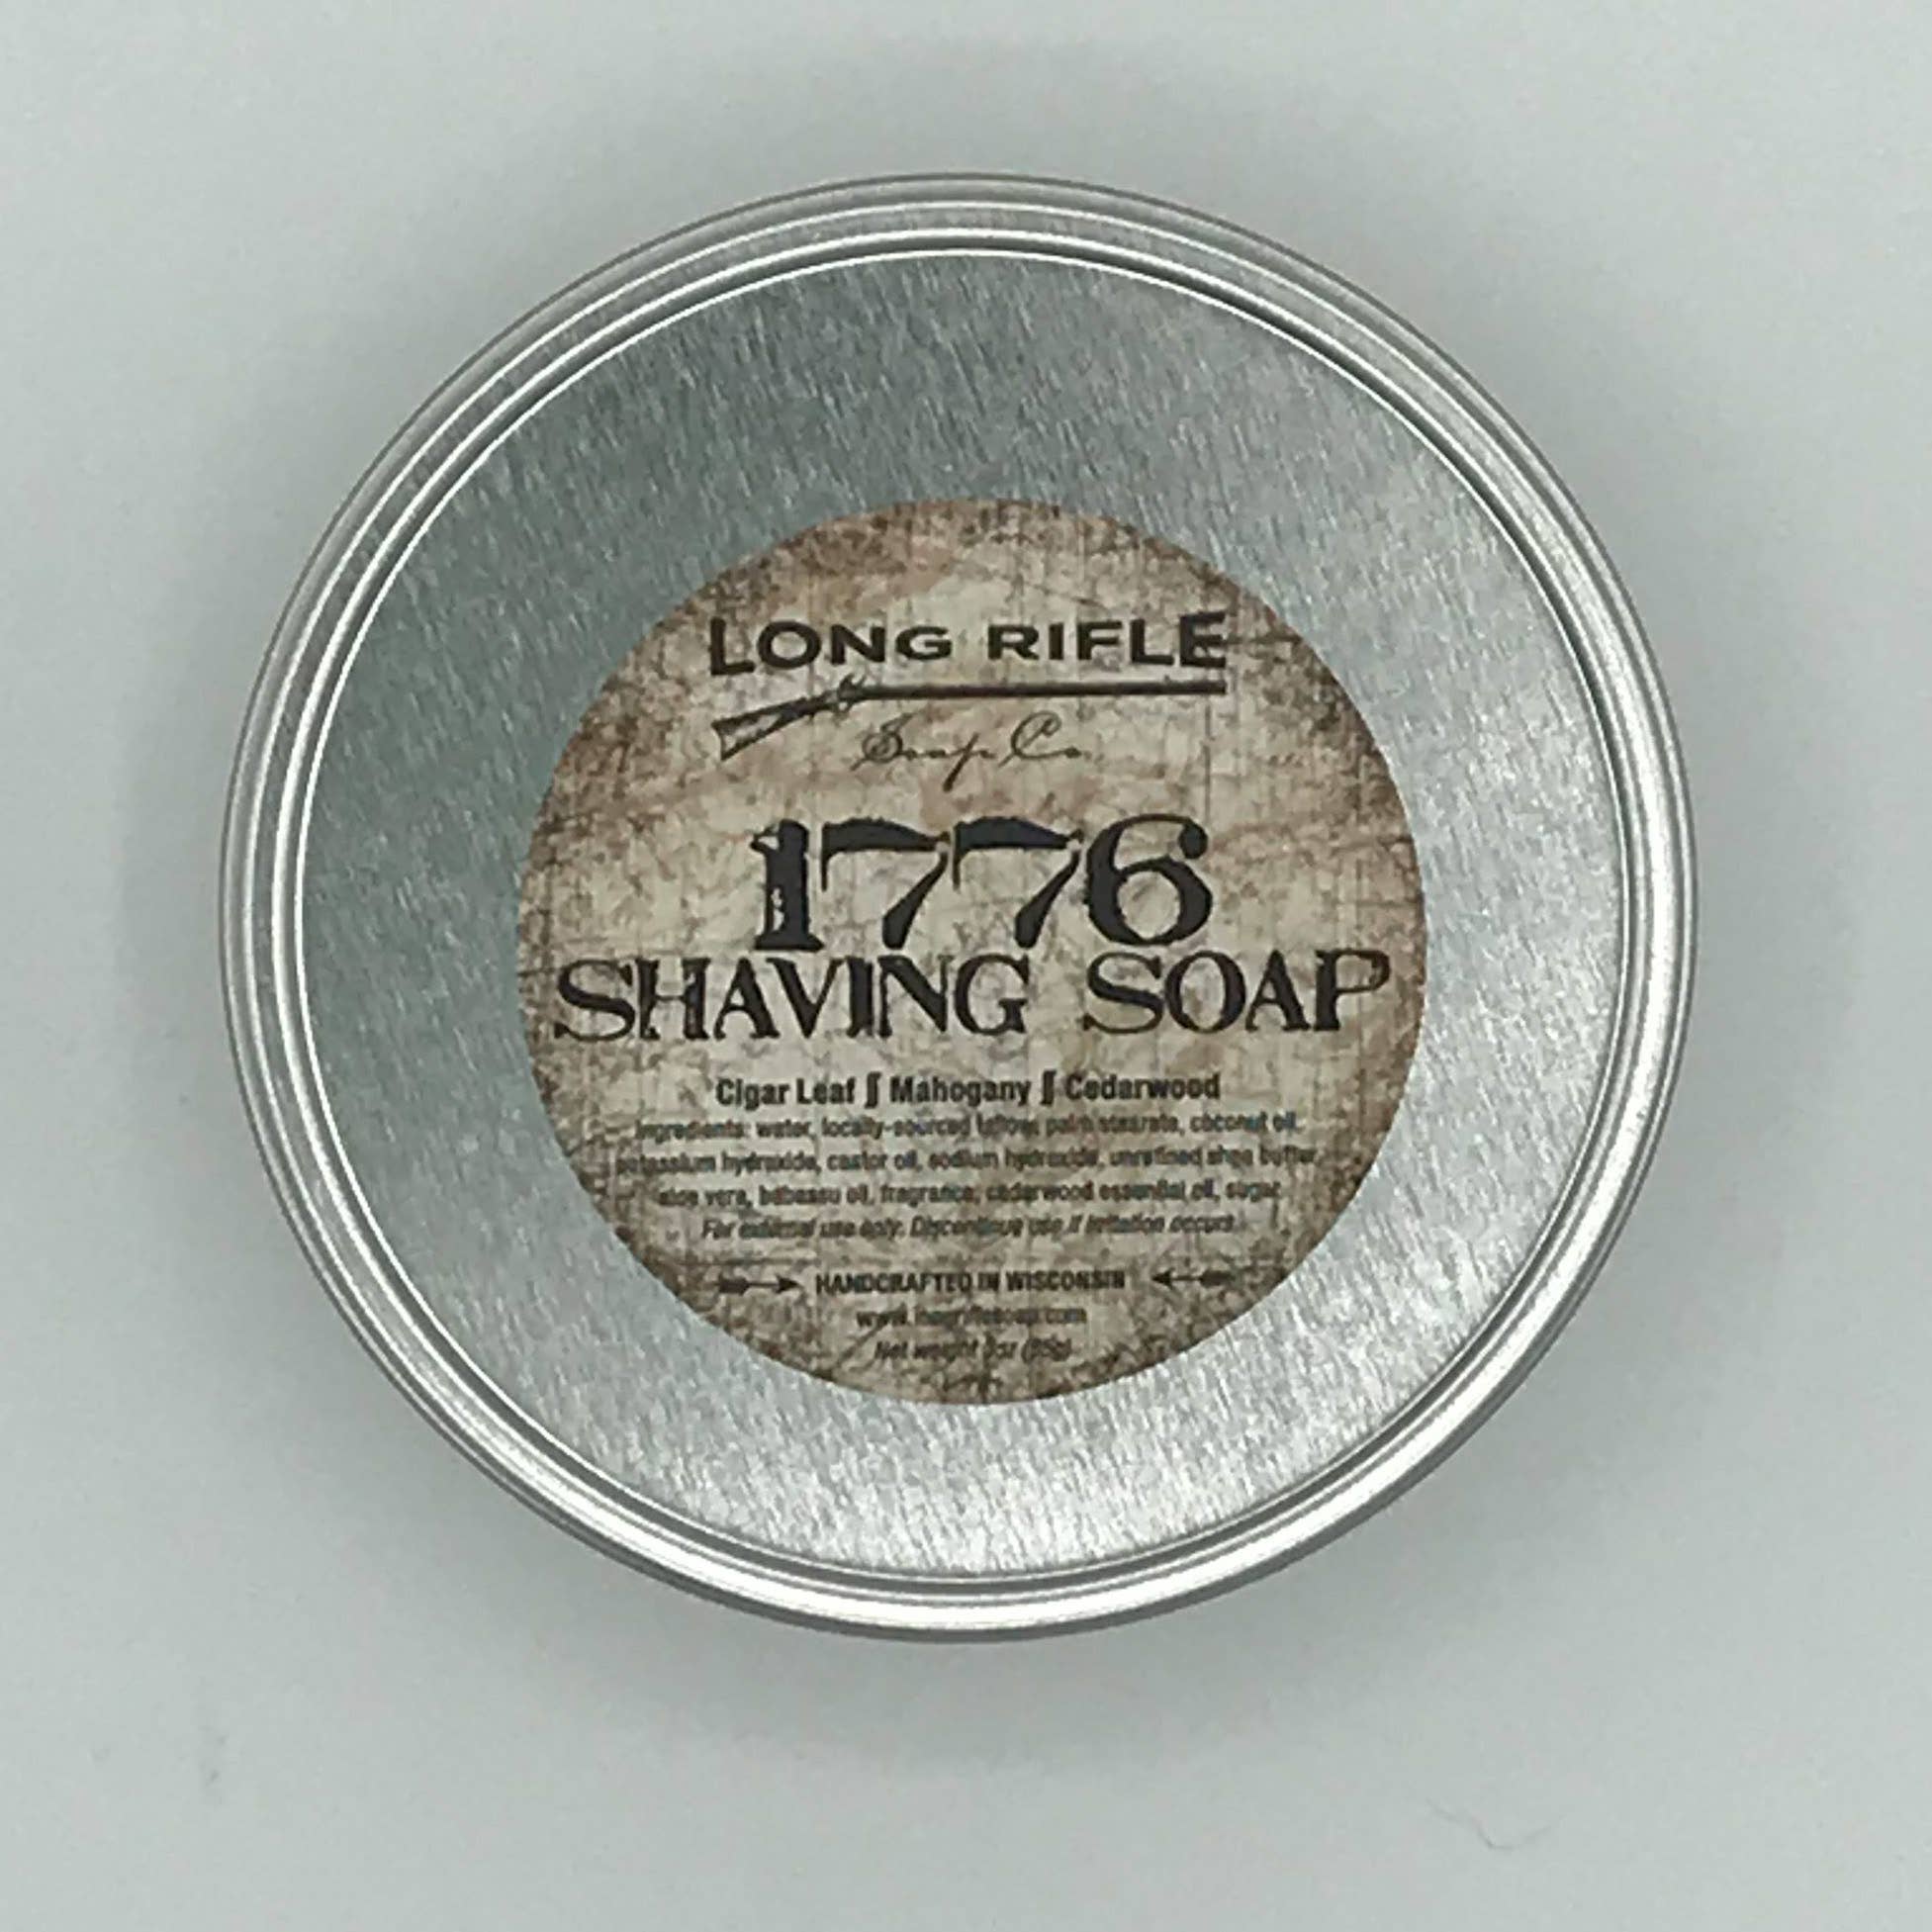 long rifle shaving soap 1776